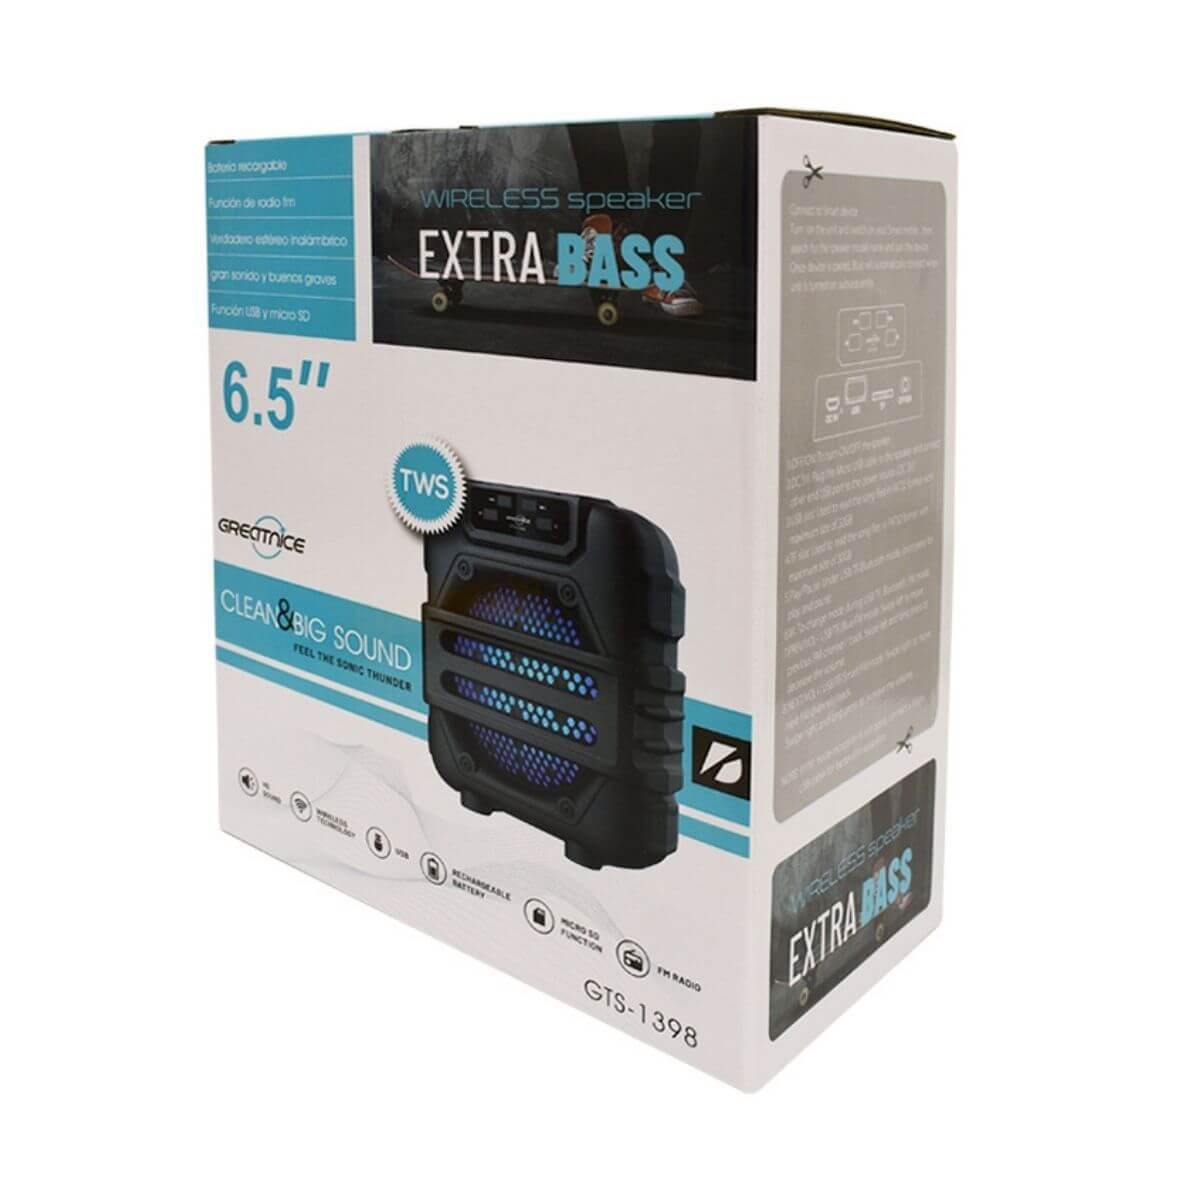 GTS 1398 Extra Bass Wireless Speaker